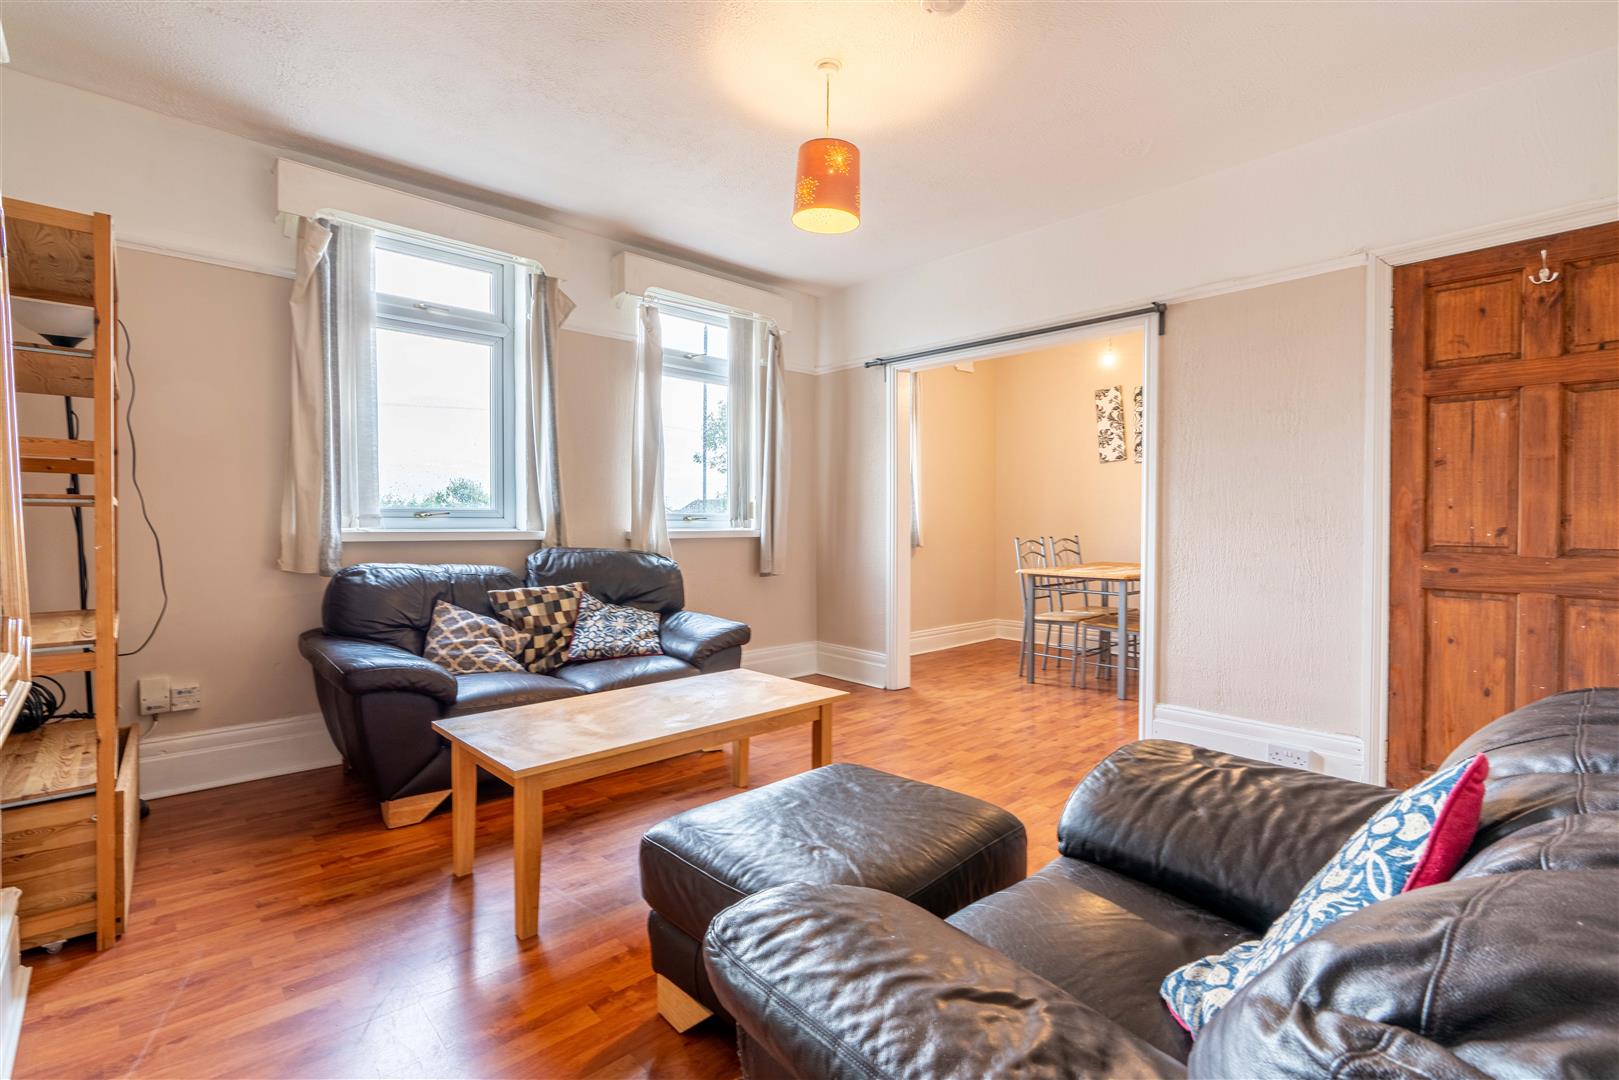 3 bed apartment to rent in Kenton Road, Newcastle Upon Tyne, NE3 